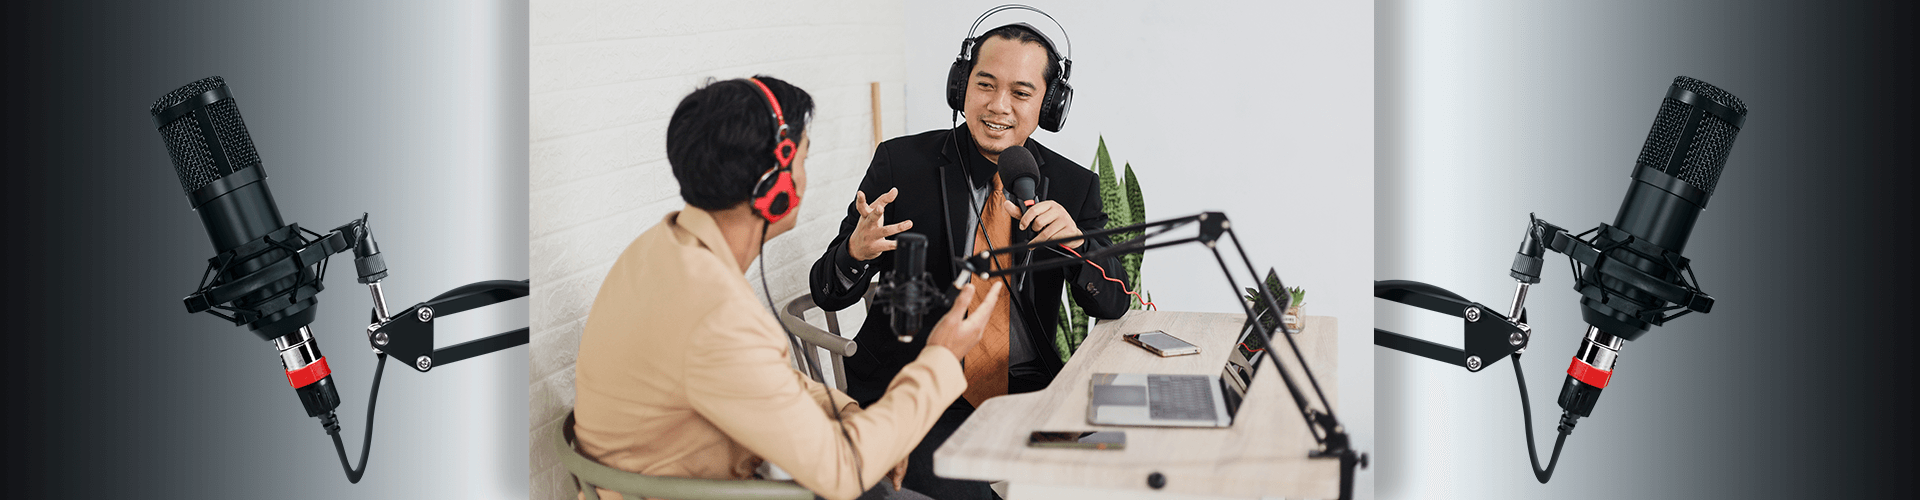 Two men wearing headphones speaking into microphones during podcast interview